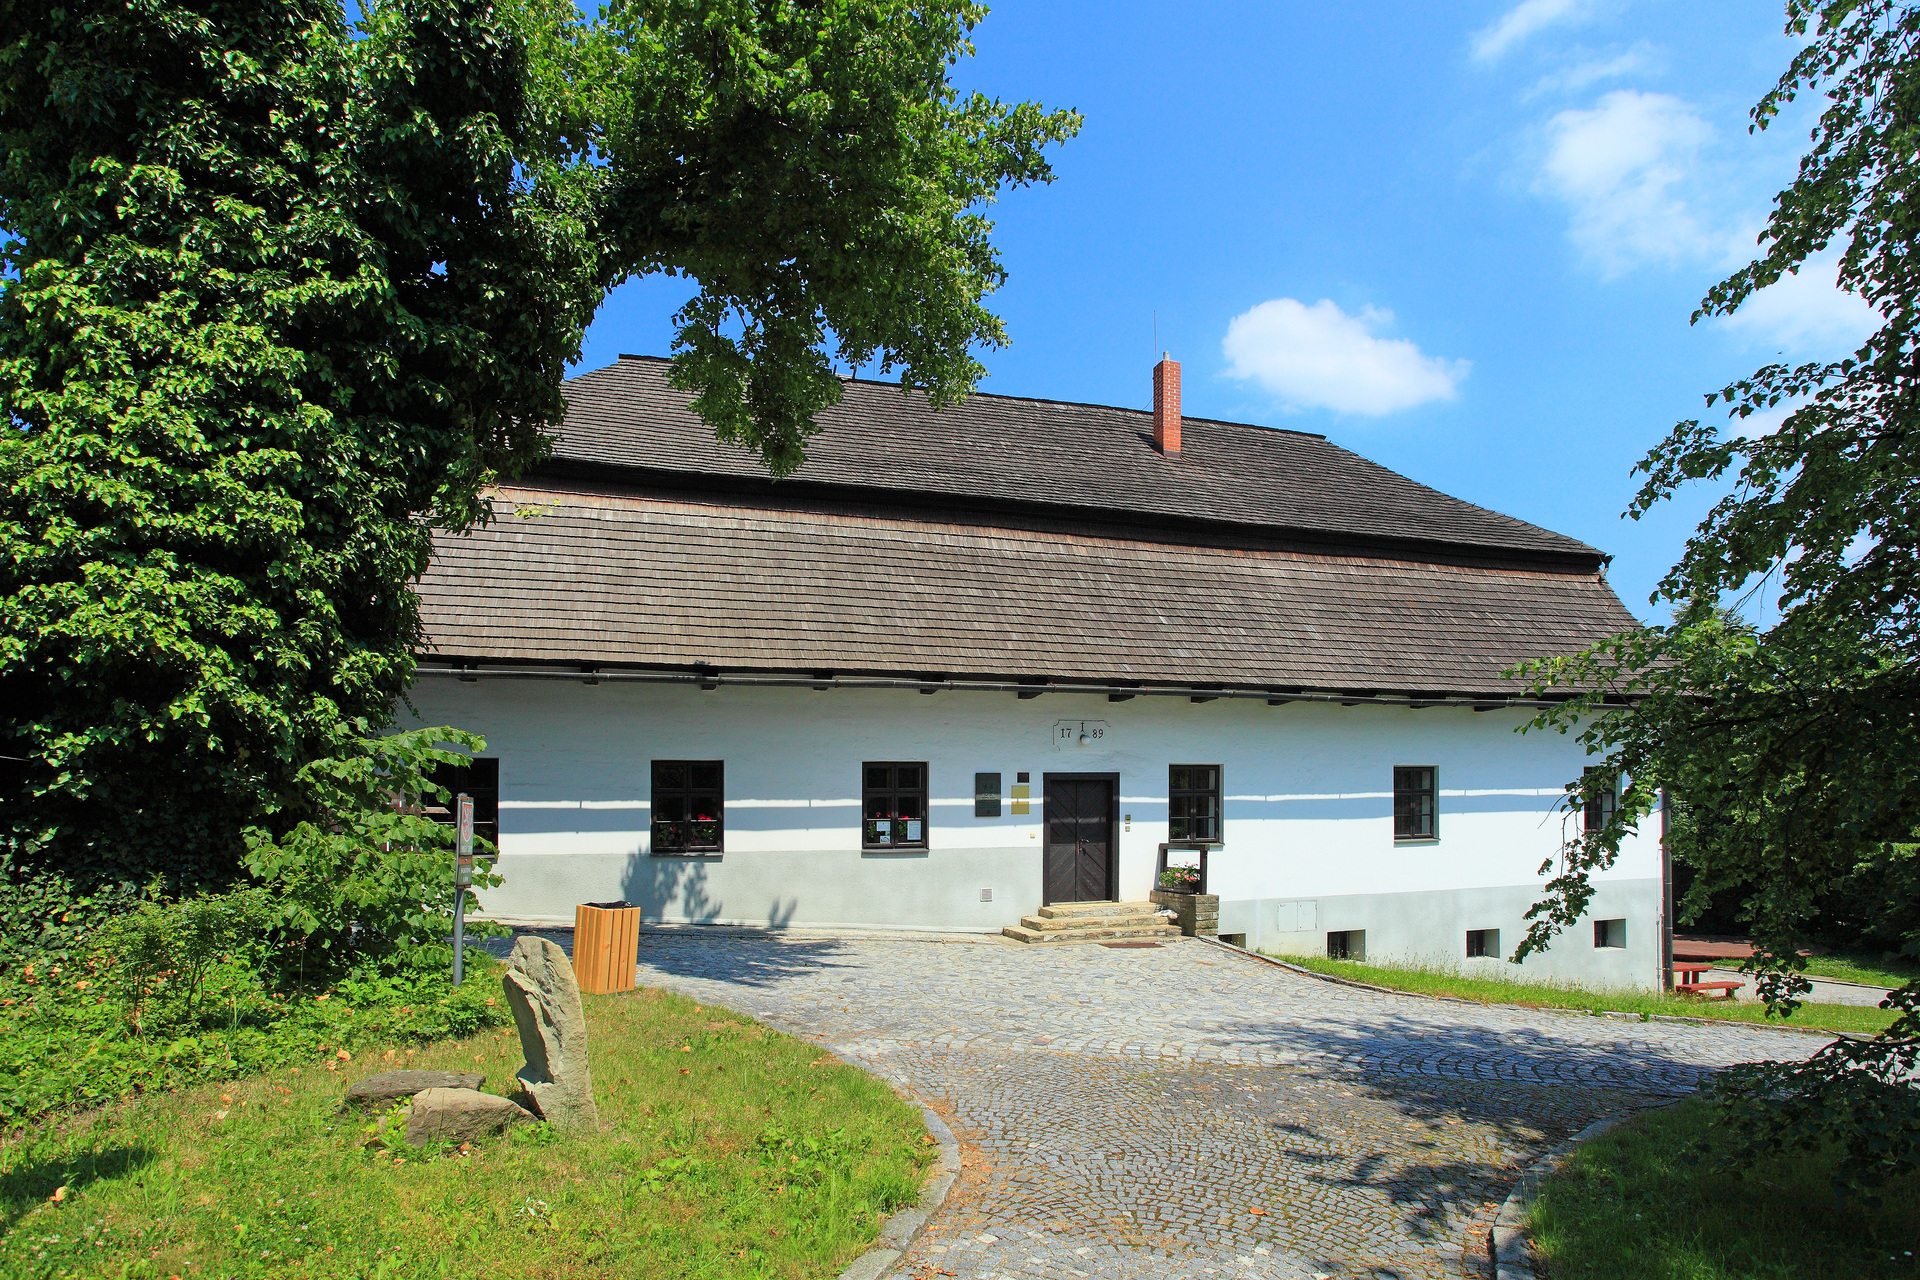 Museum Fojtství (Custodian’s Museum) in Kopřivnice